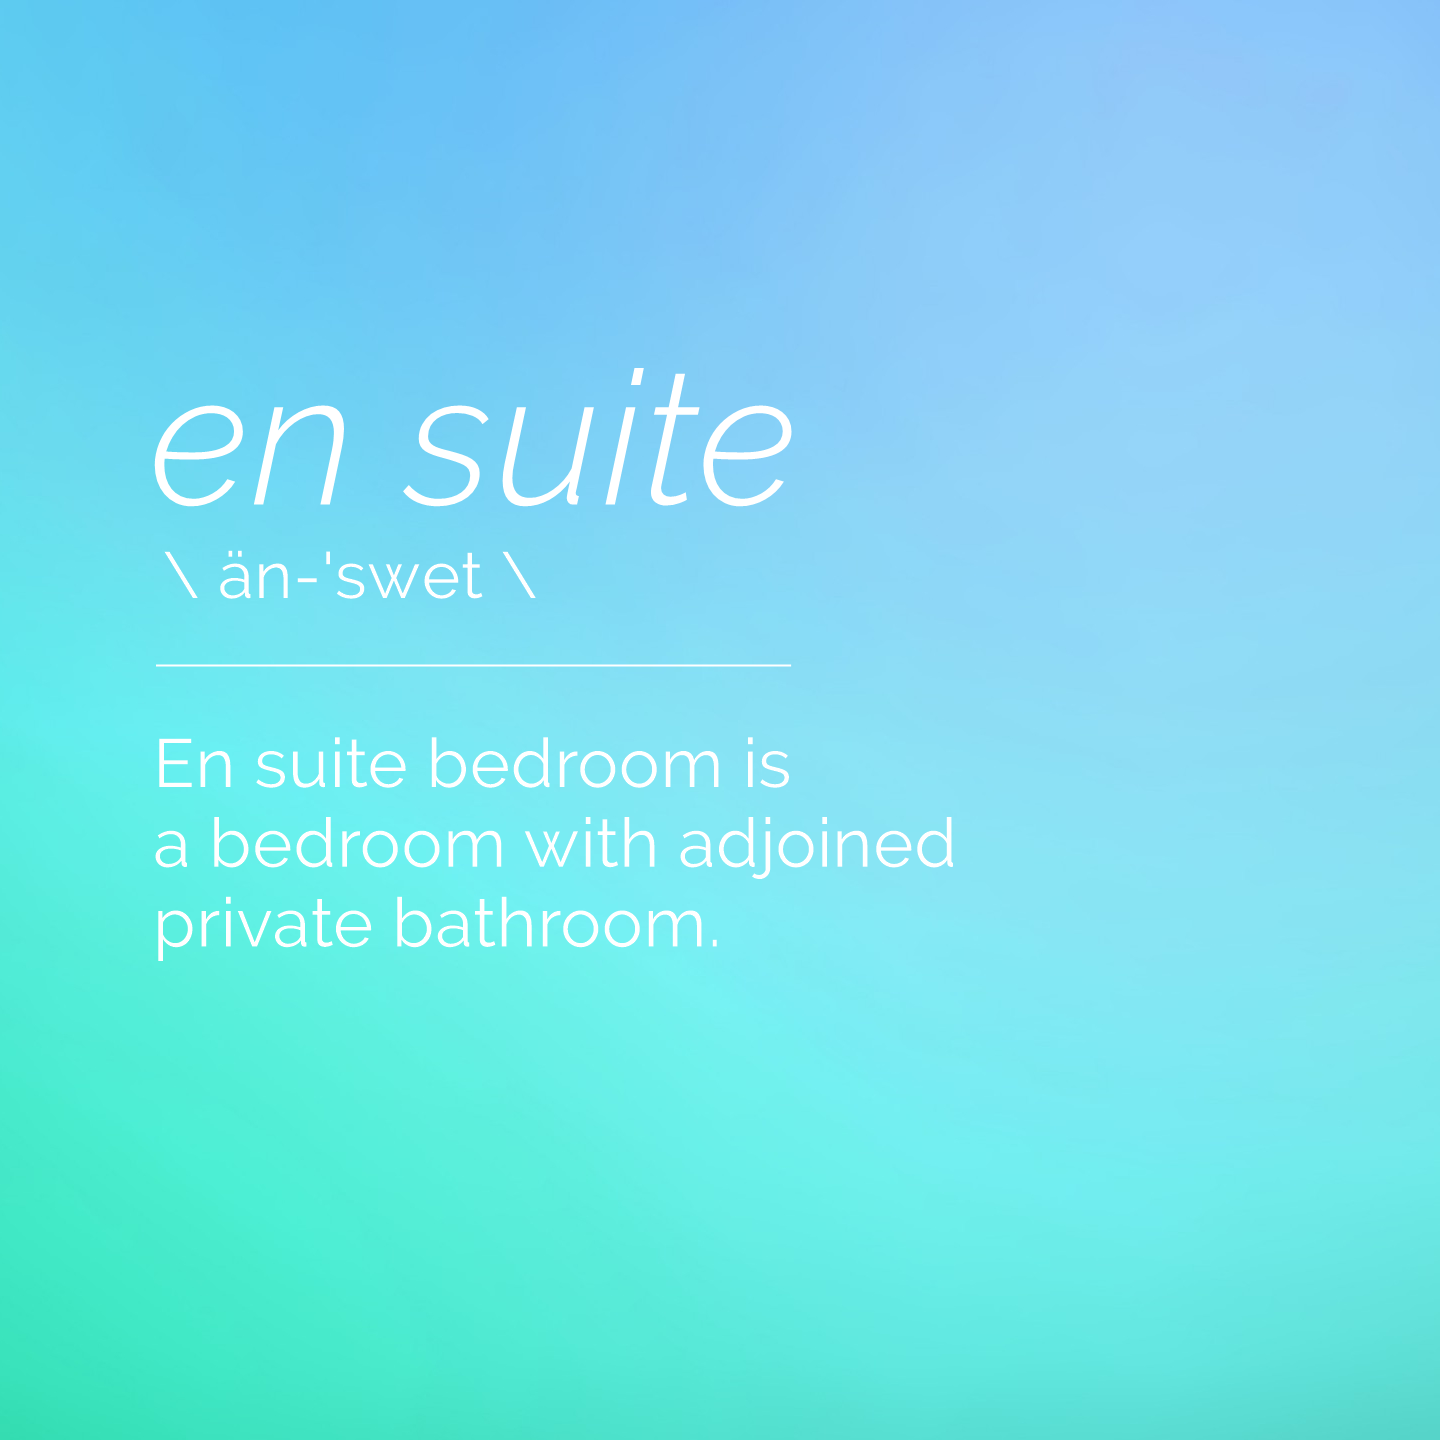 en suite bedroom definition